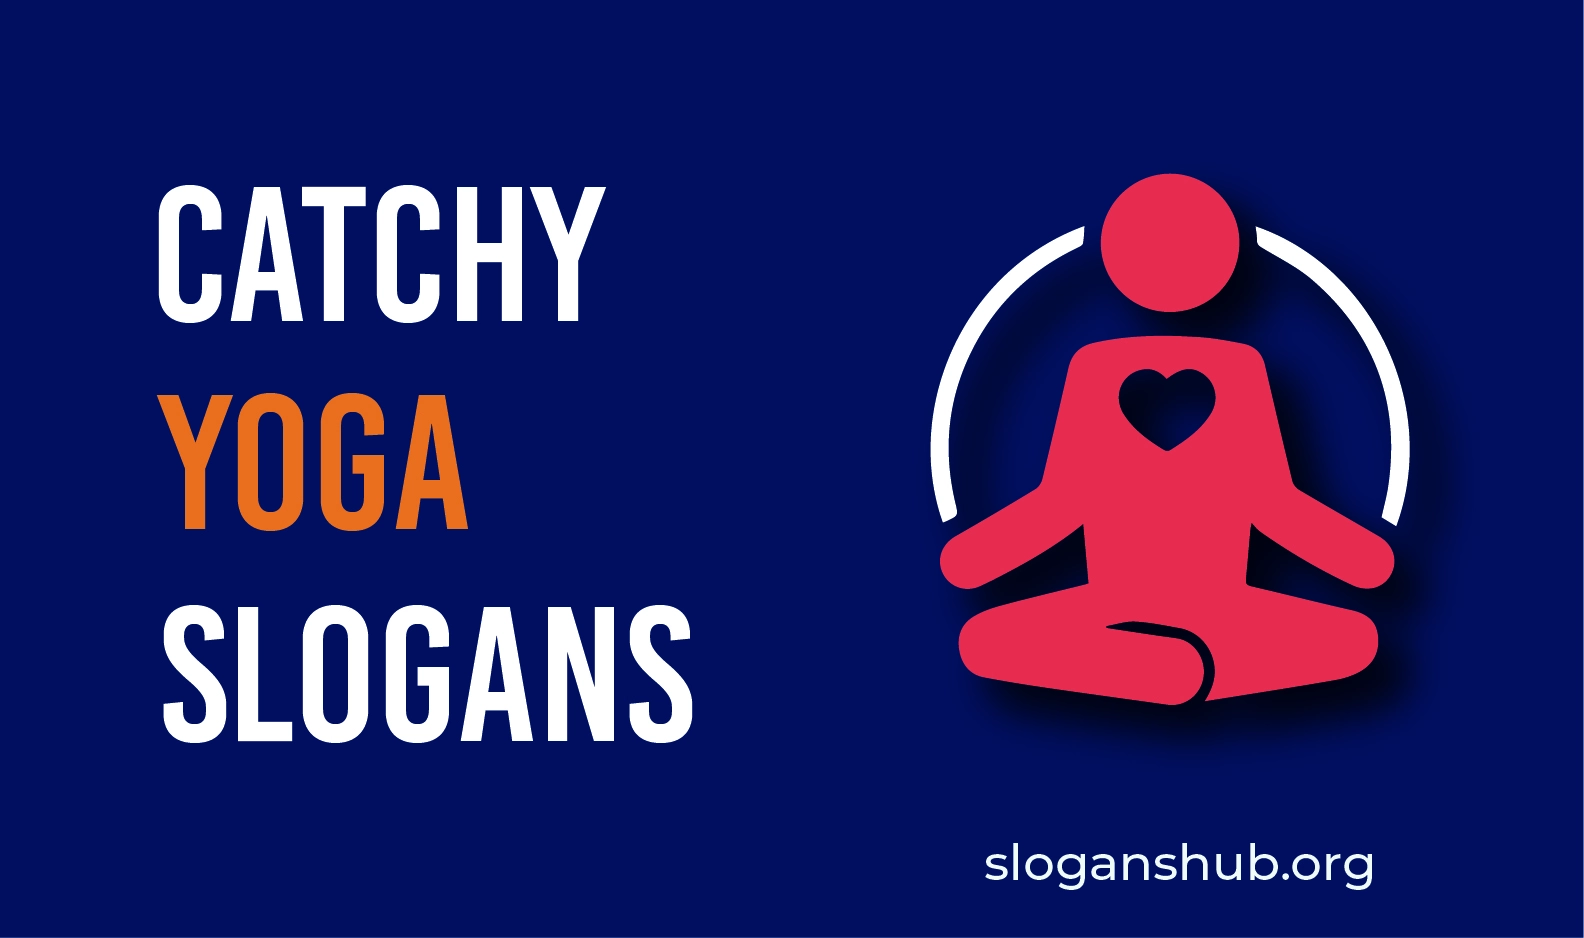 410 Catchy Yoga Slogans, Best Yoga Taglines, & Yoga Phrases